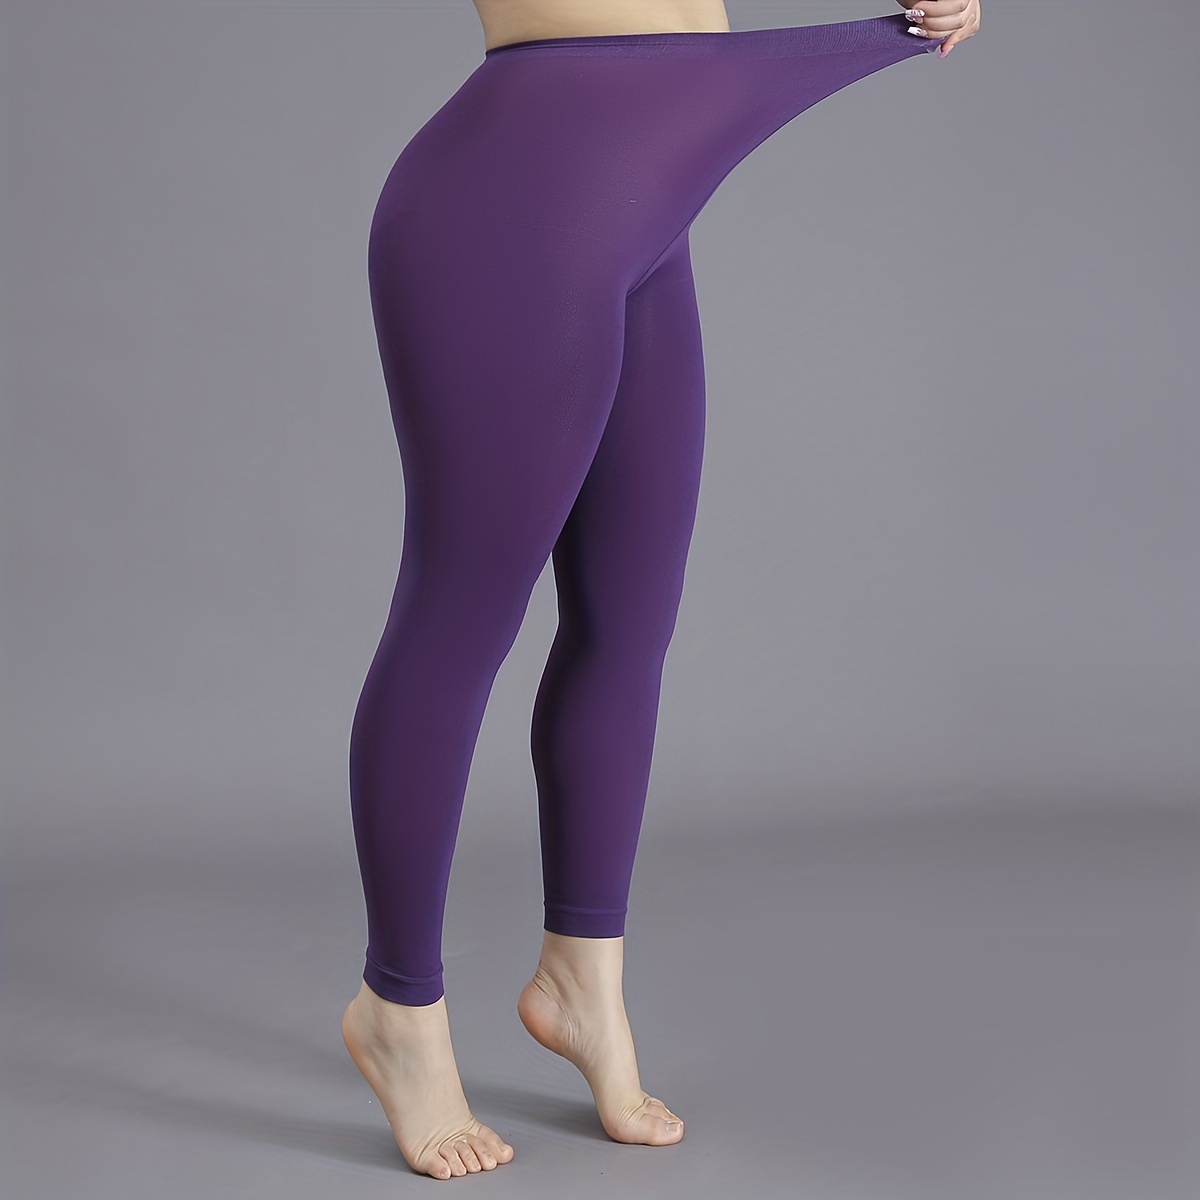 Plus Size Casual Leggings Stockings For 0xl 2xl Women's Plus